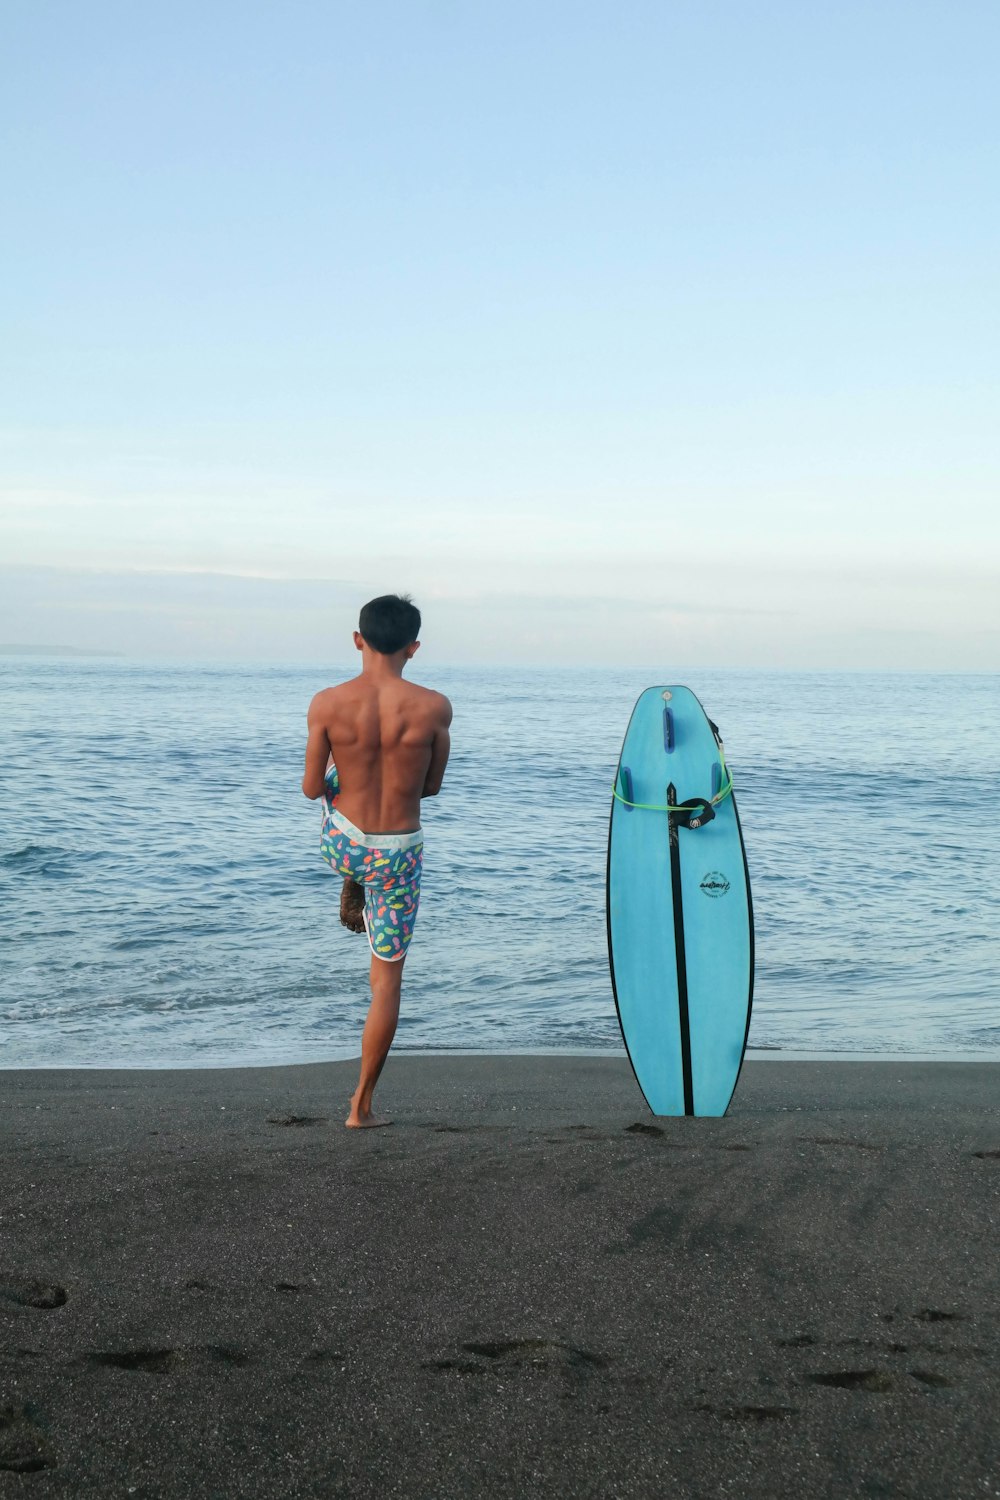 topless man standing near blue surfboard on seashore